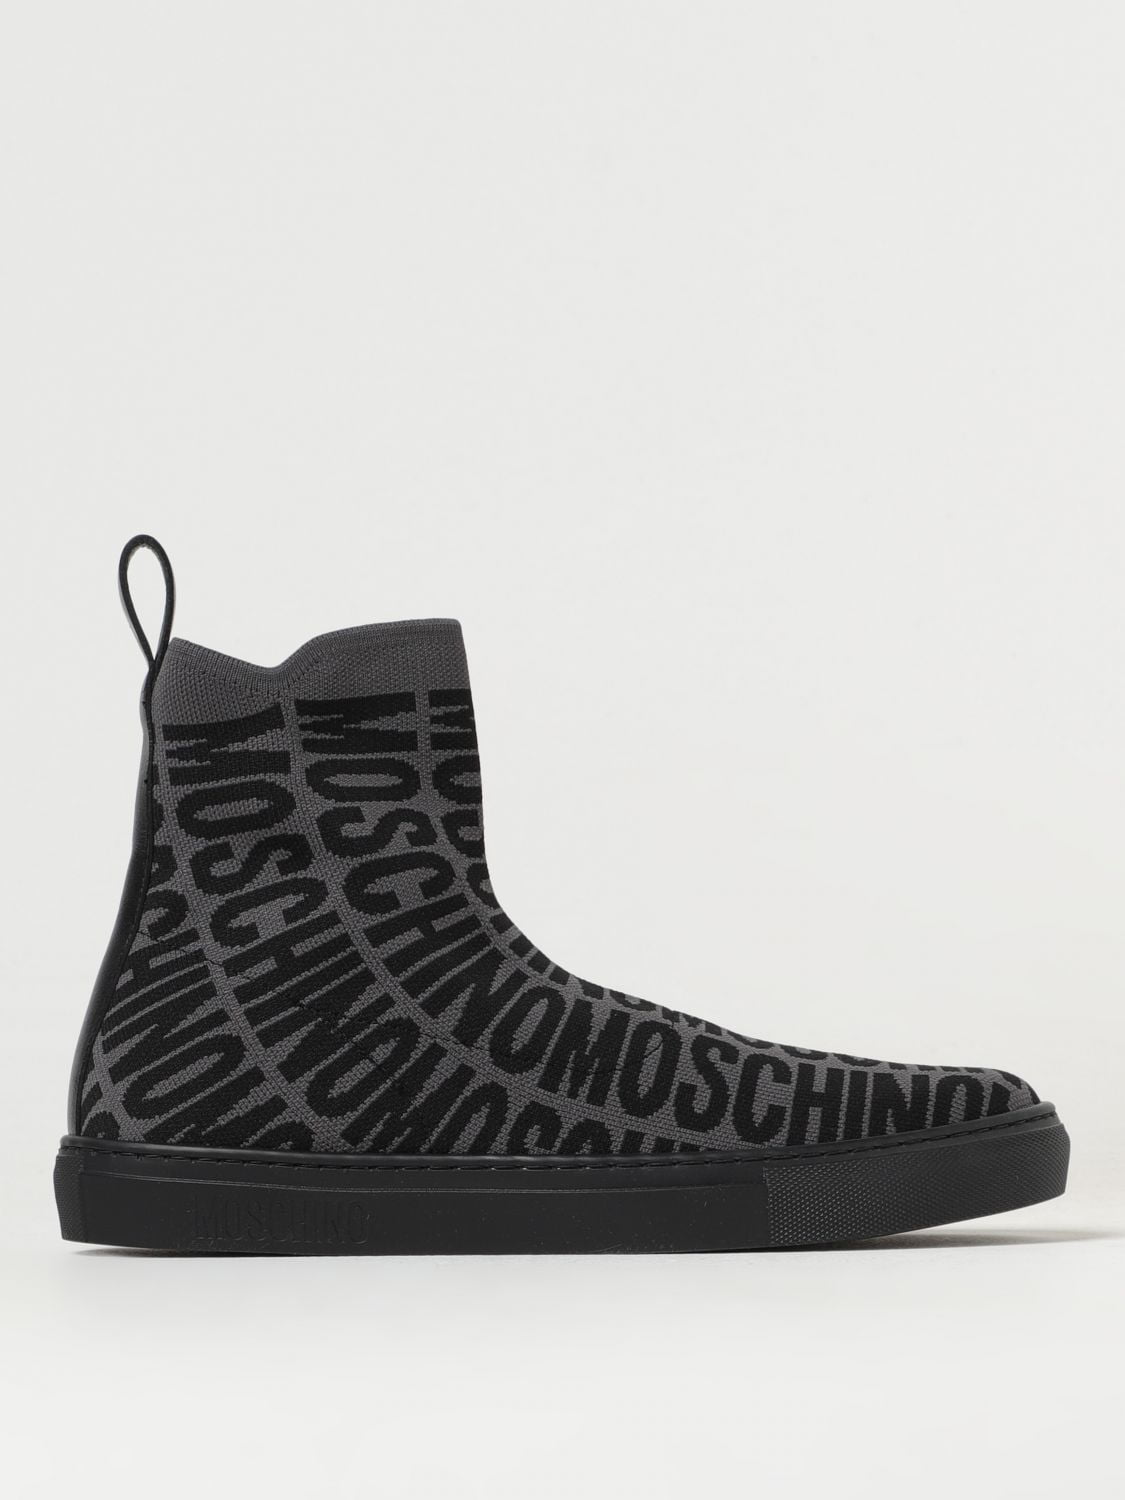 Moschino Couture Sneakers Men Black Men - Walmart.com